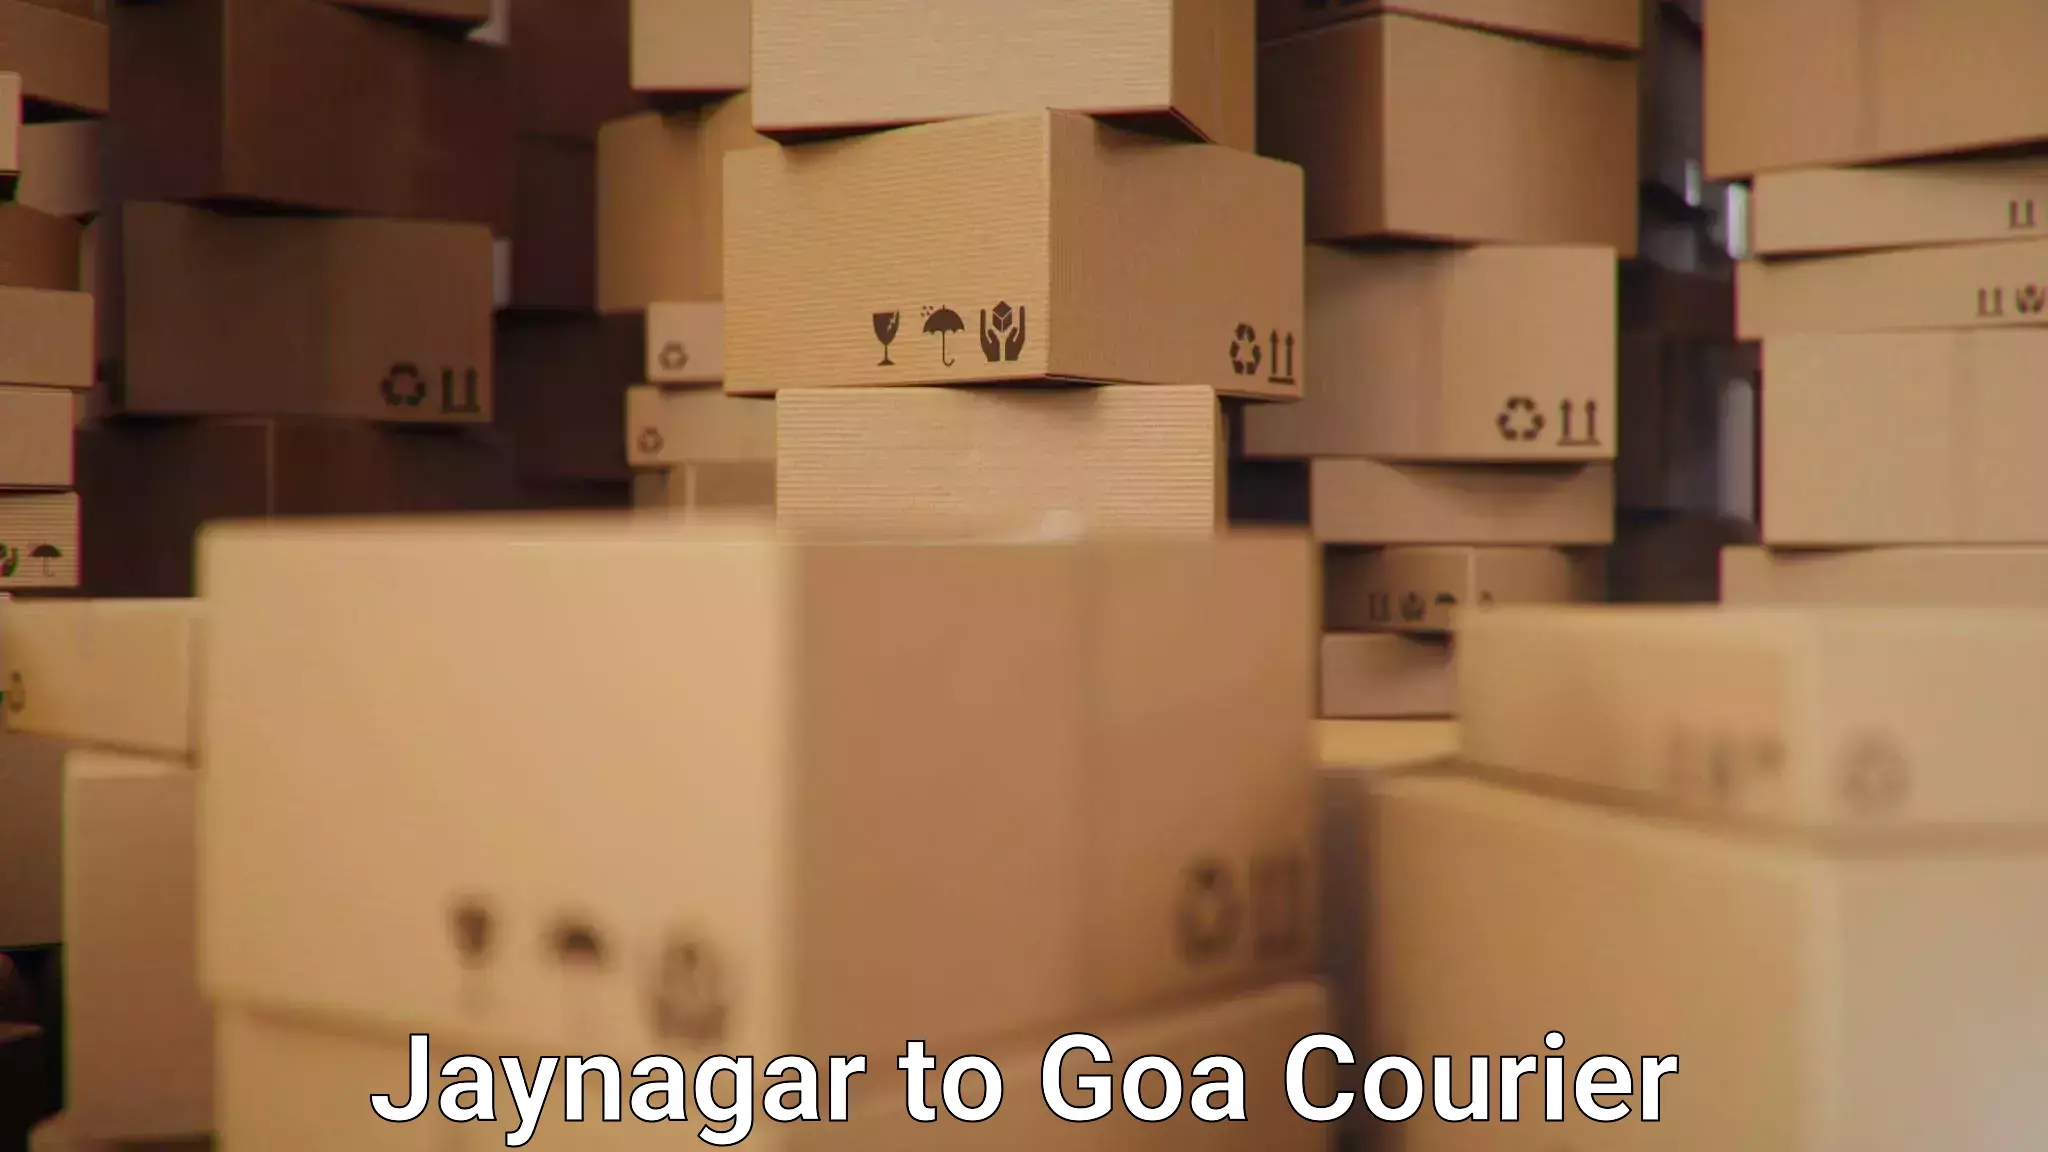 Easy access courier services Jaynagar to IIT Goa